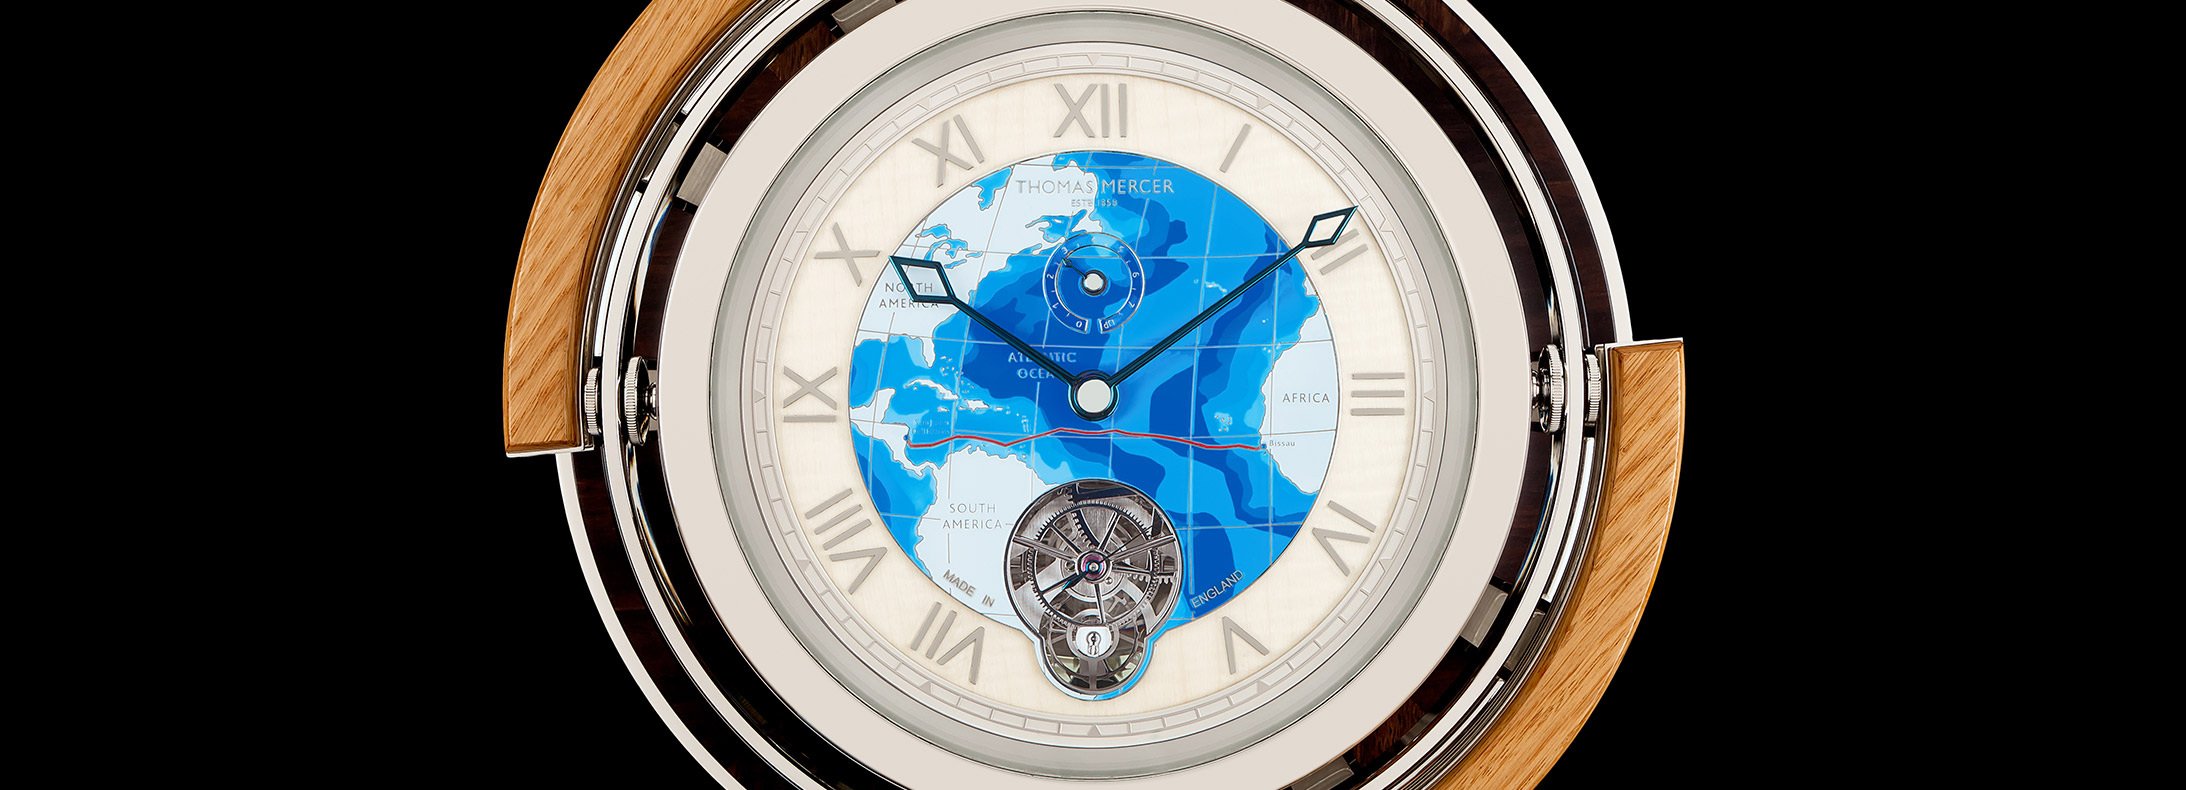 Super Yacht Times on Thomas Mercer marine chronometer